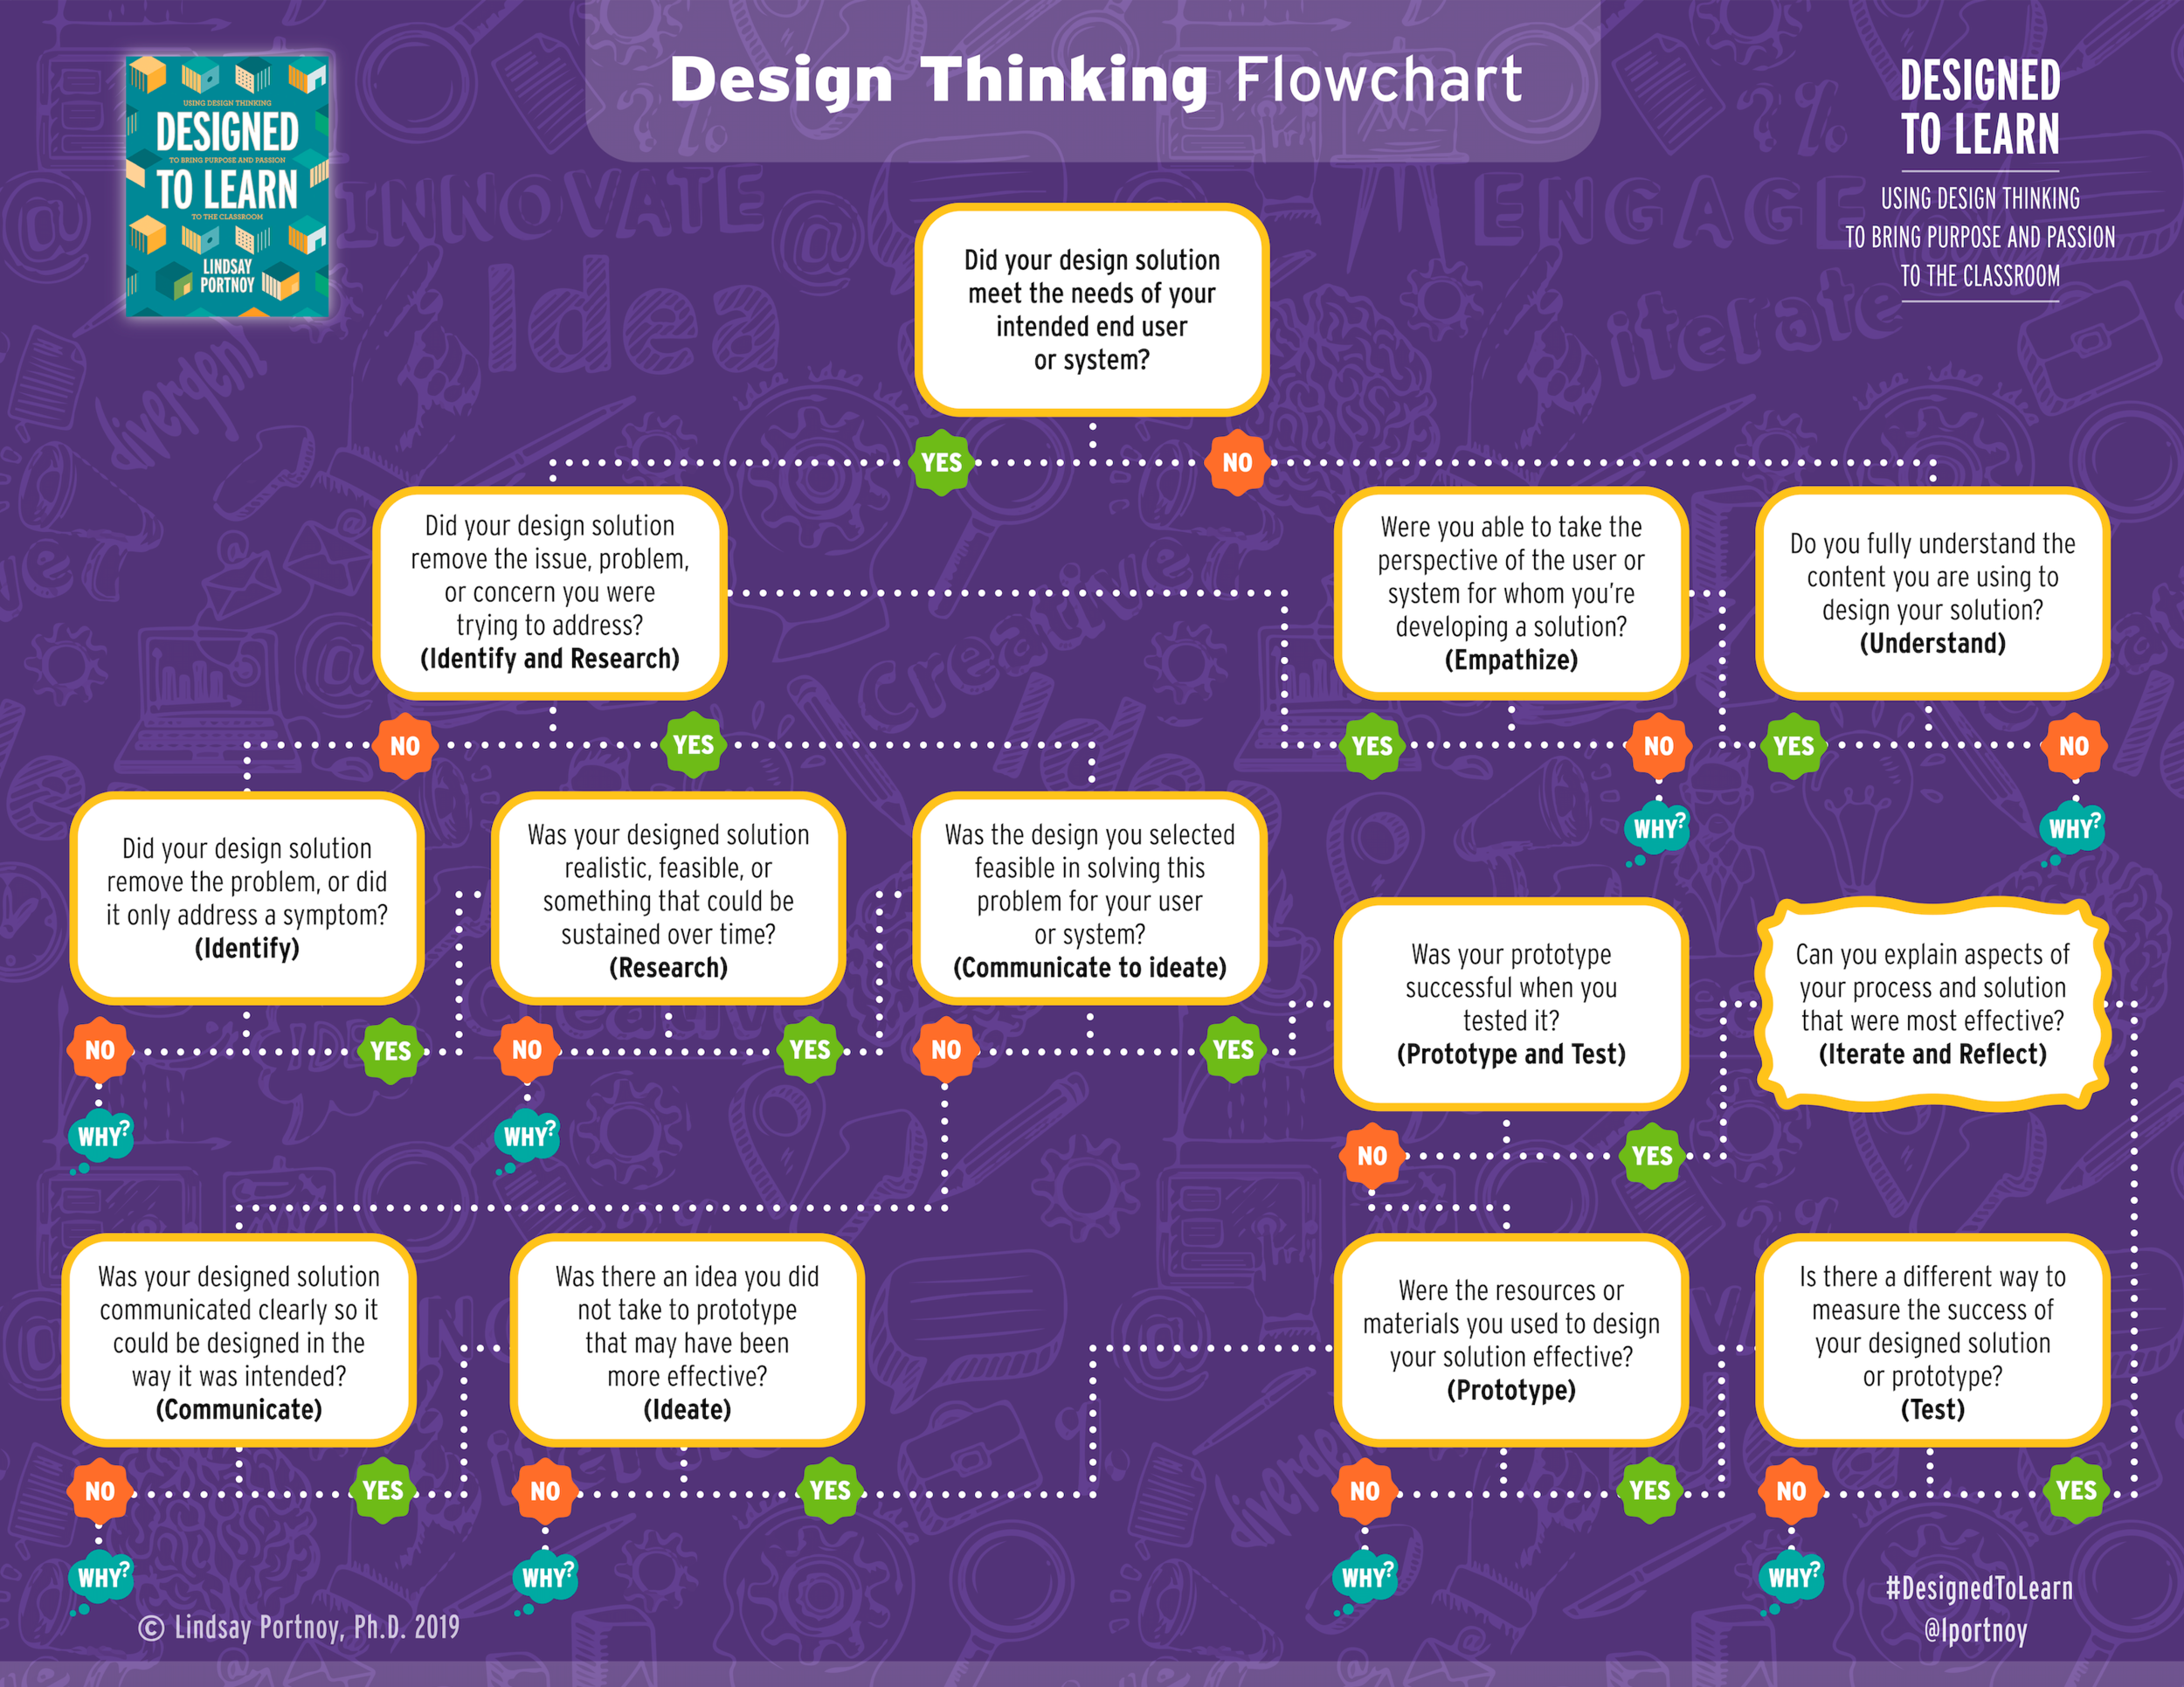 Design Thinking Flowchart.png